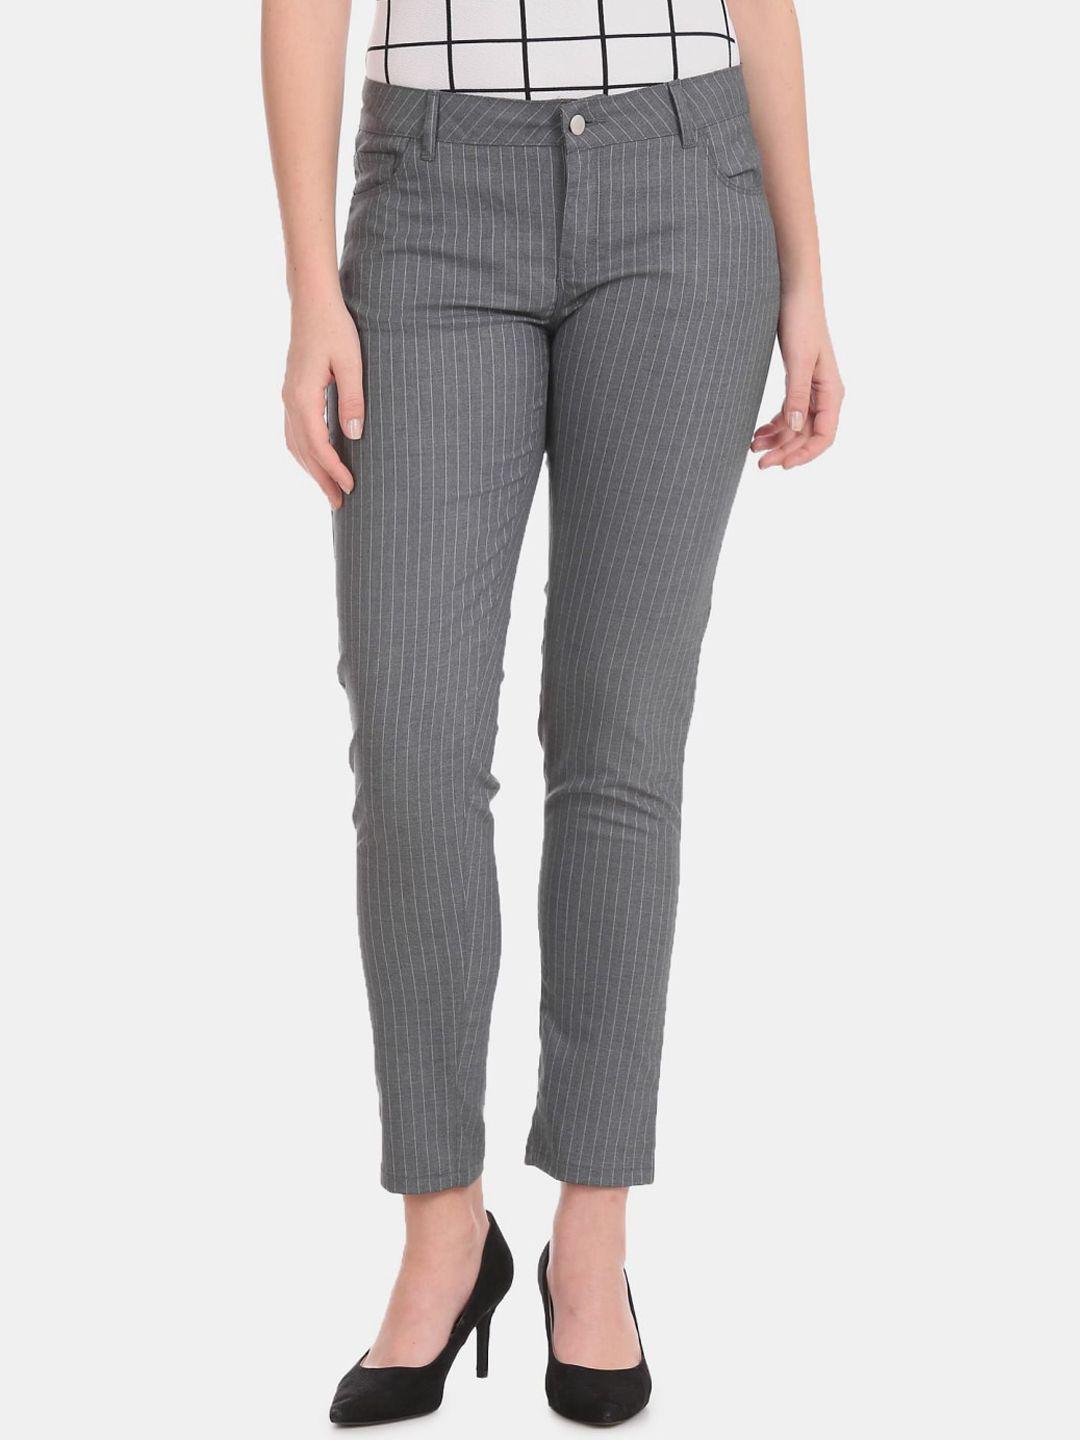 v-mart women striped cotton formal trousers